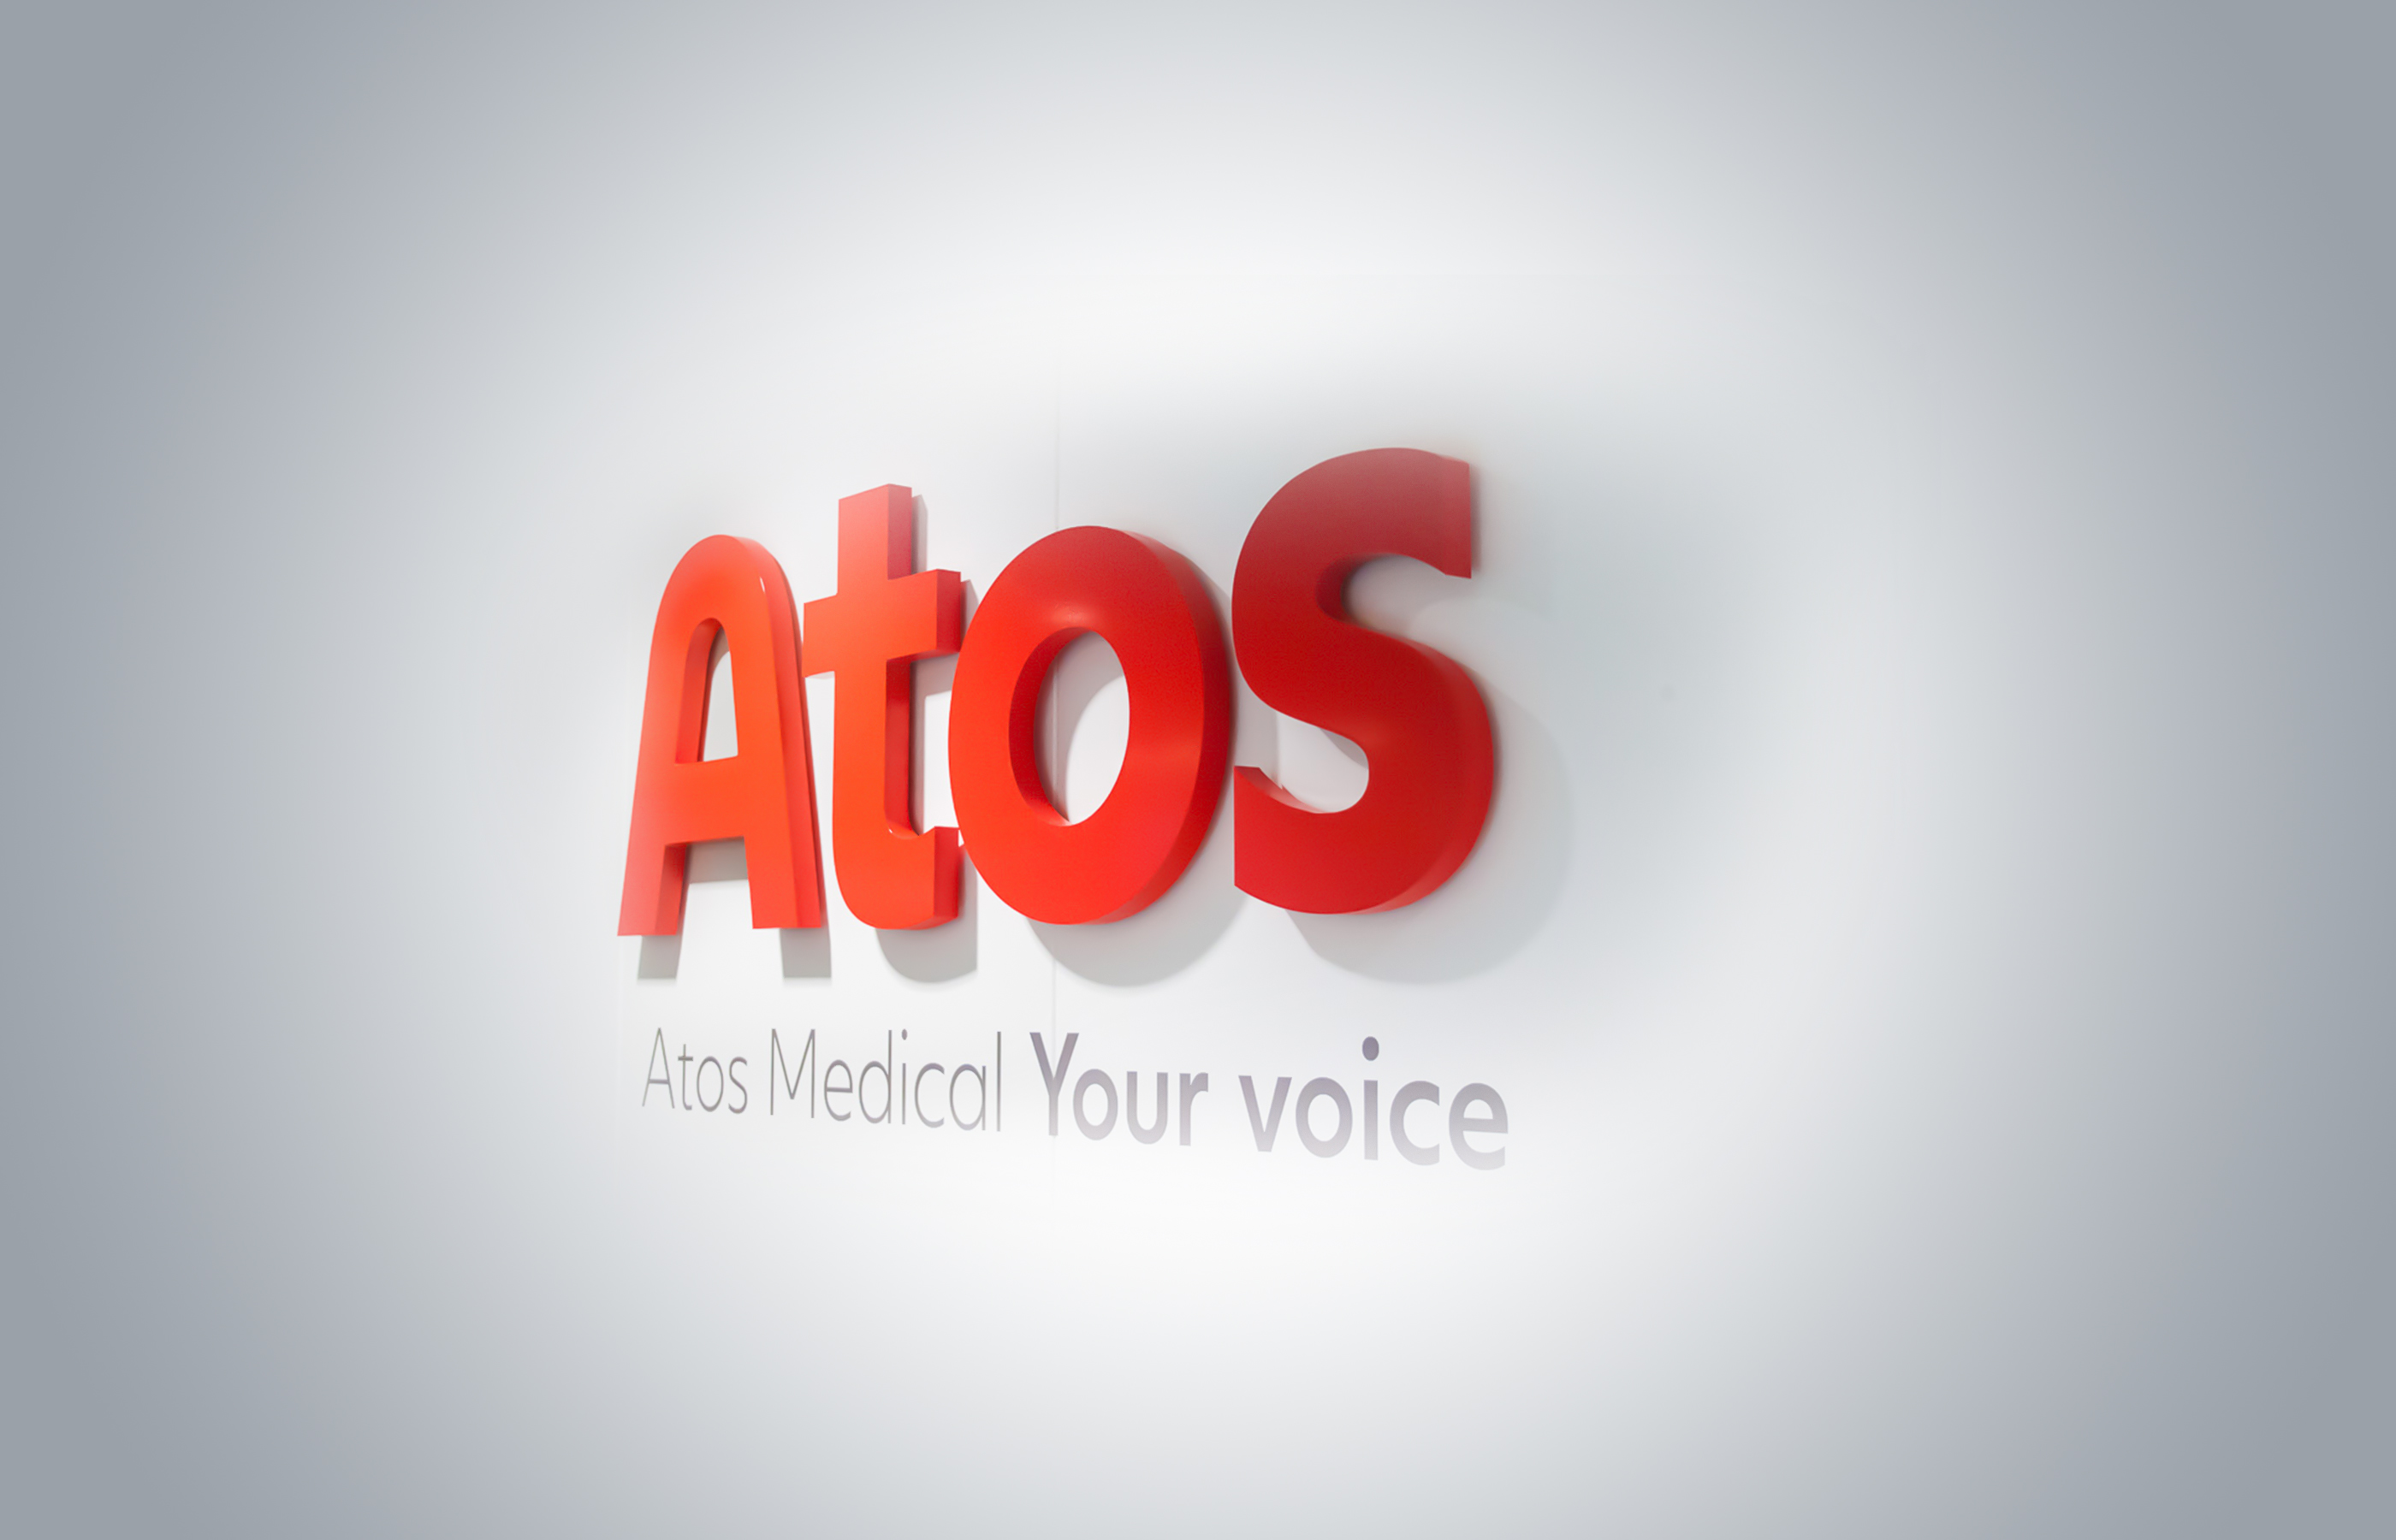 Atos Medical selects Capgemini as their Salesforce partner